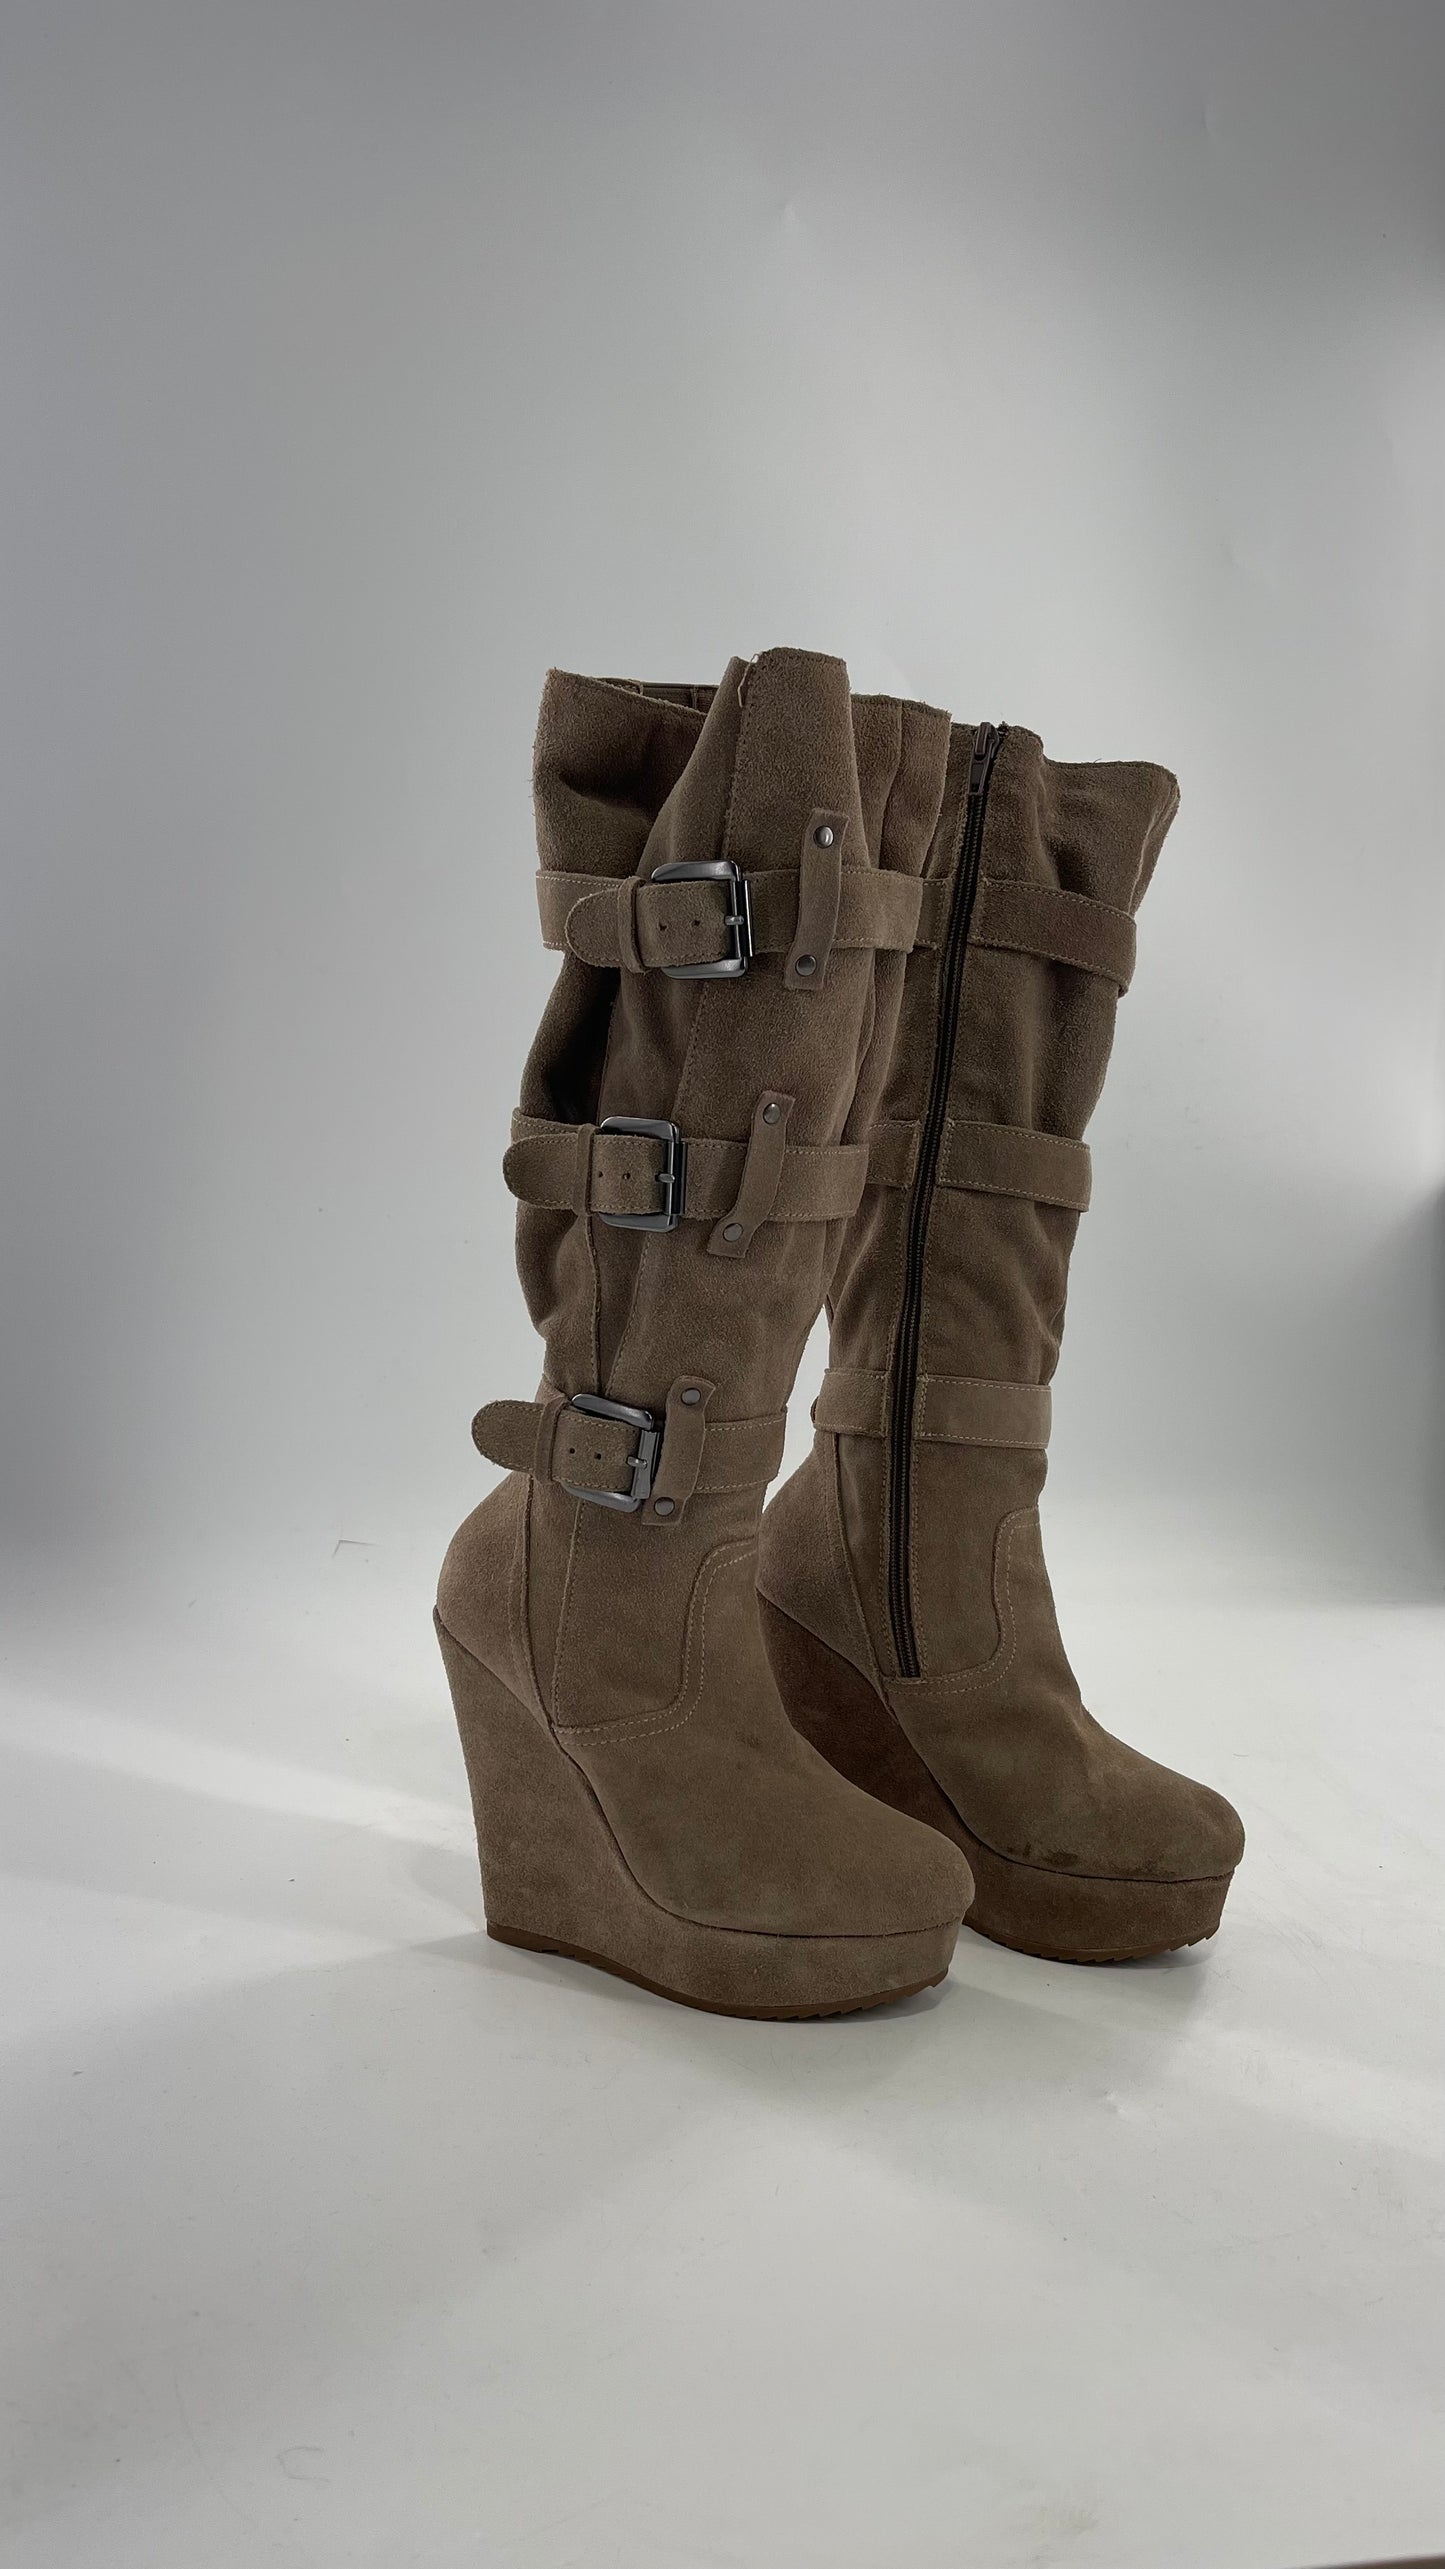 Vintage Bakers Genuine Suede Leather Gray/Tan Wedge Platform Knee High Boots with Gun Metal Buckles (6)